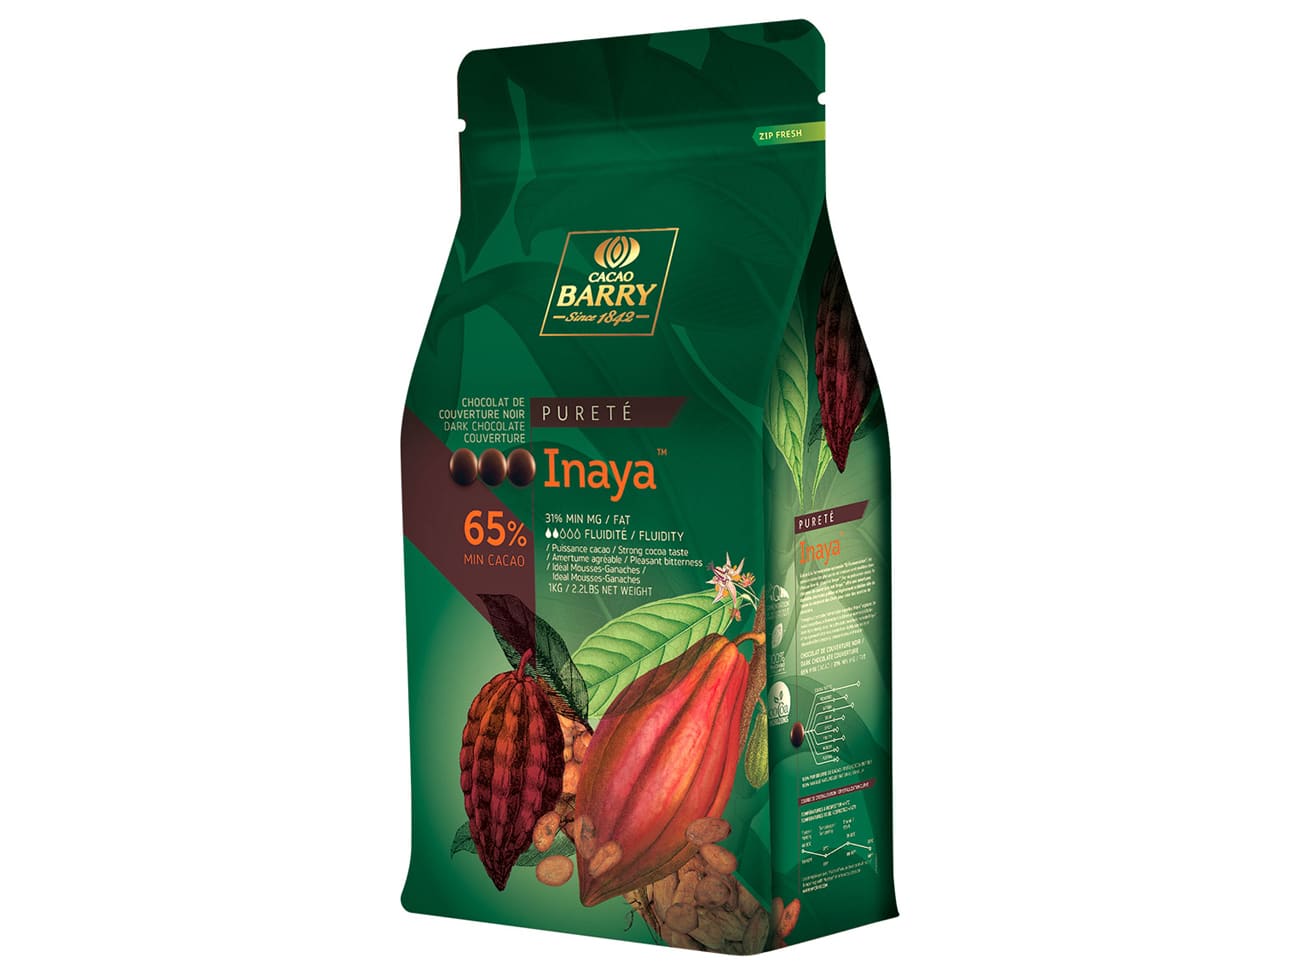 Dark chocolate couverture Venezuela 72% - Cacao Barry